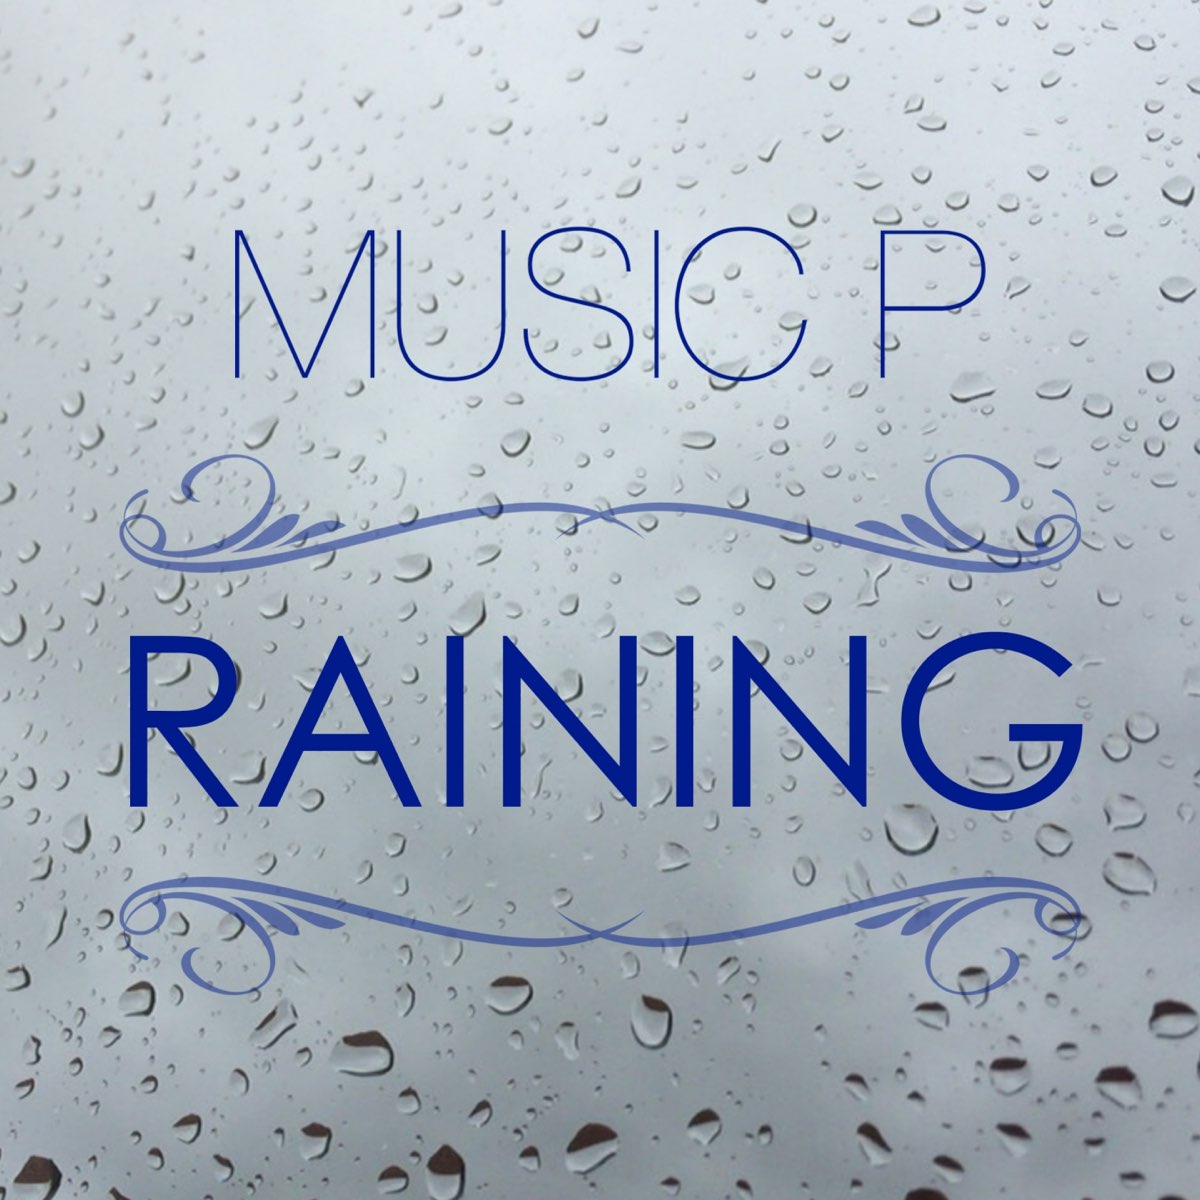 Rain ремикс. Moses p "raining Rhymes".